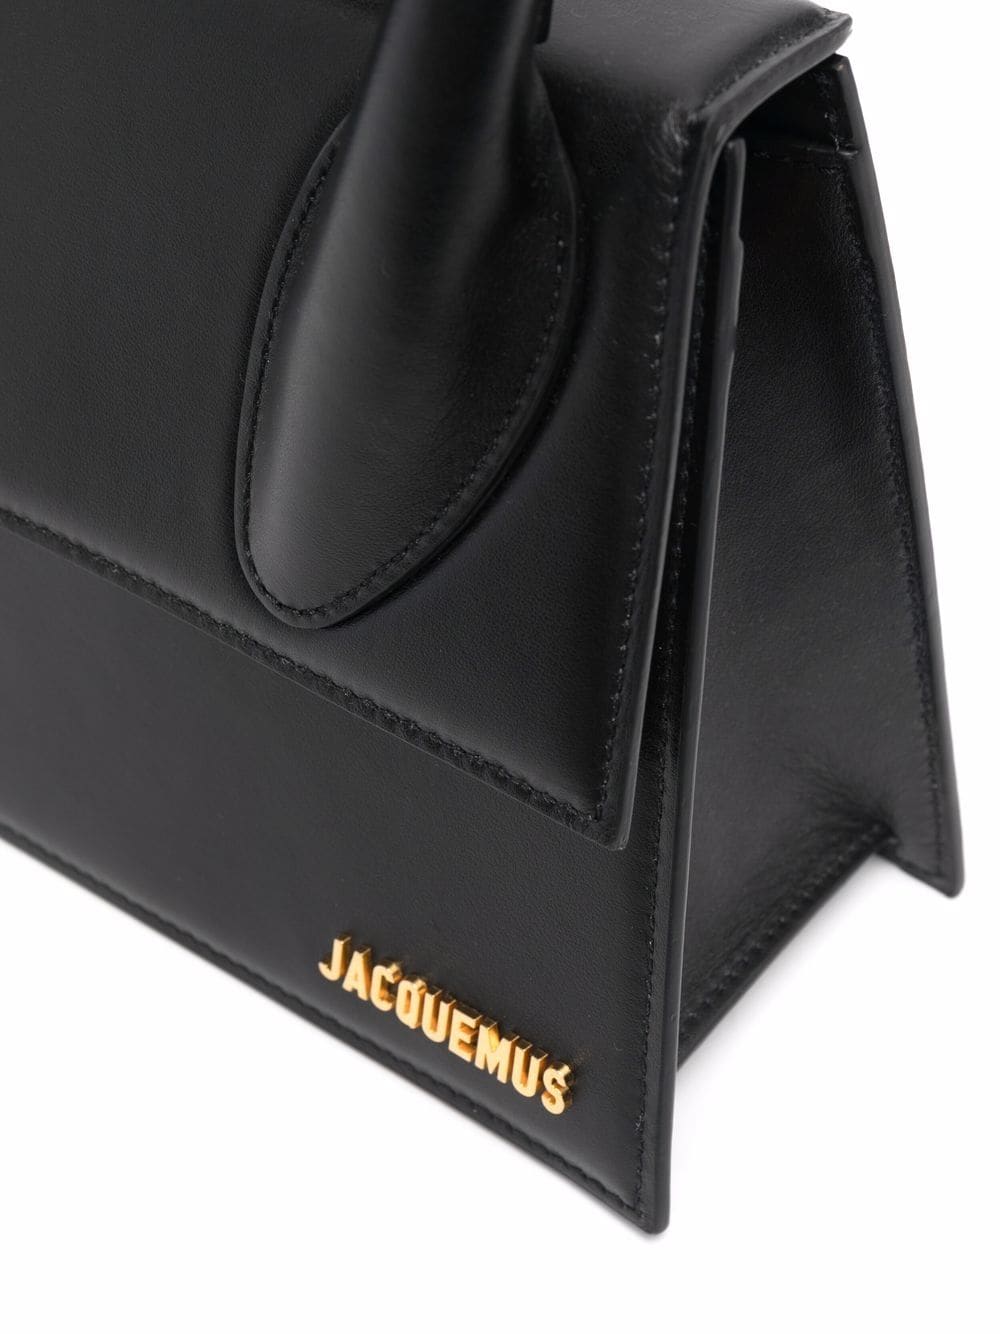 JACQUEMUS BLACK GRAND LEATHER BAG